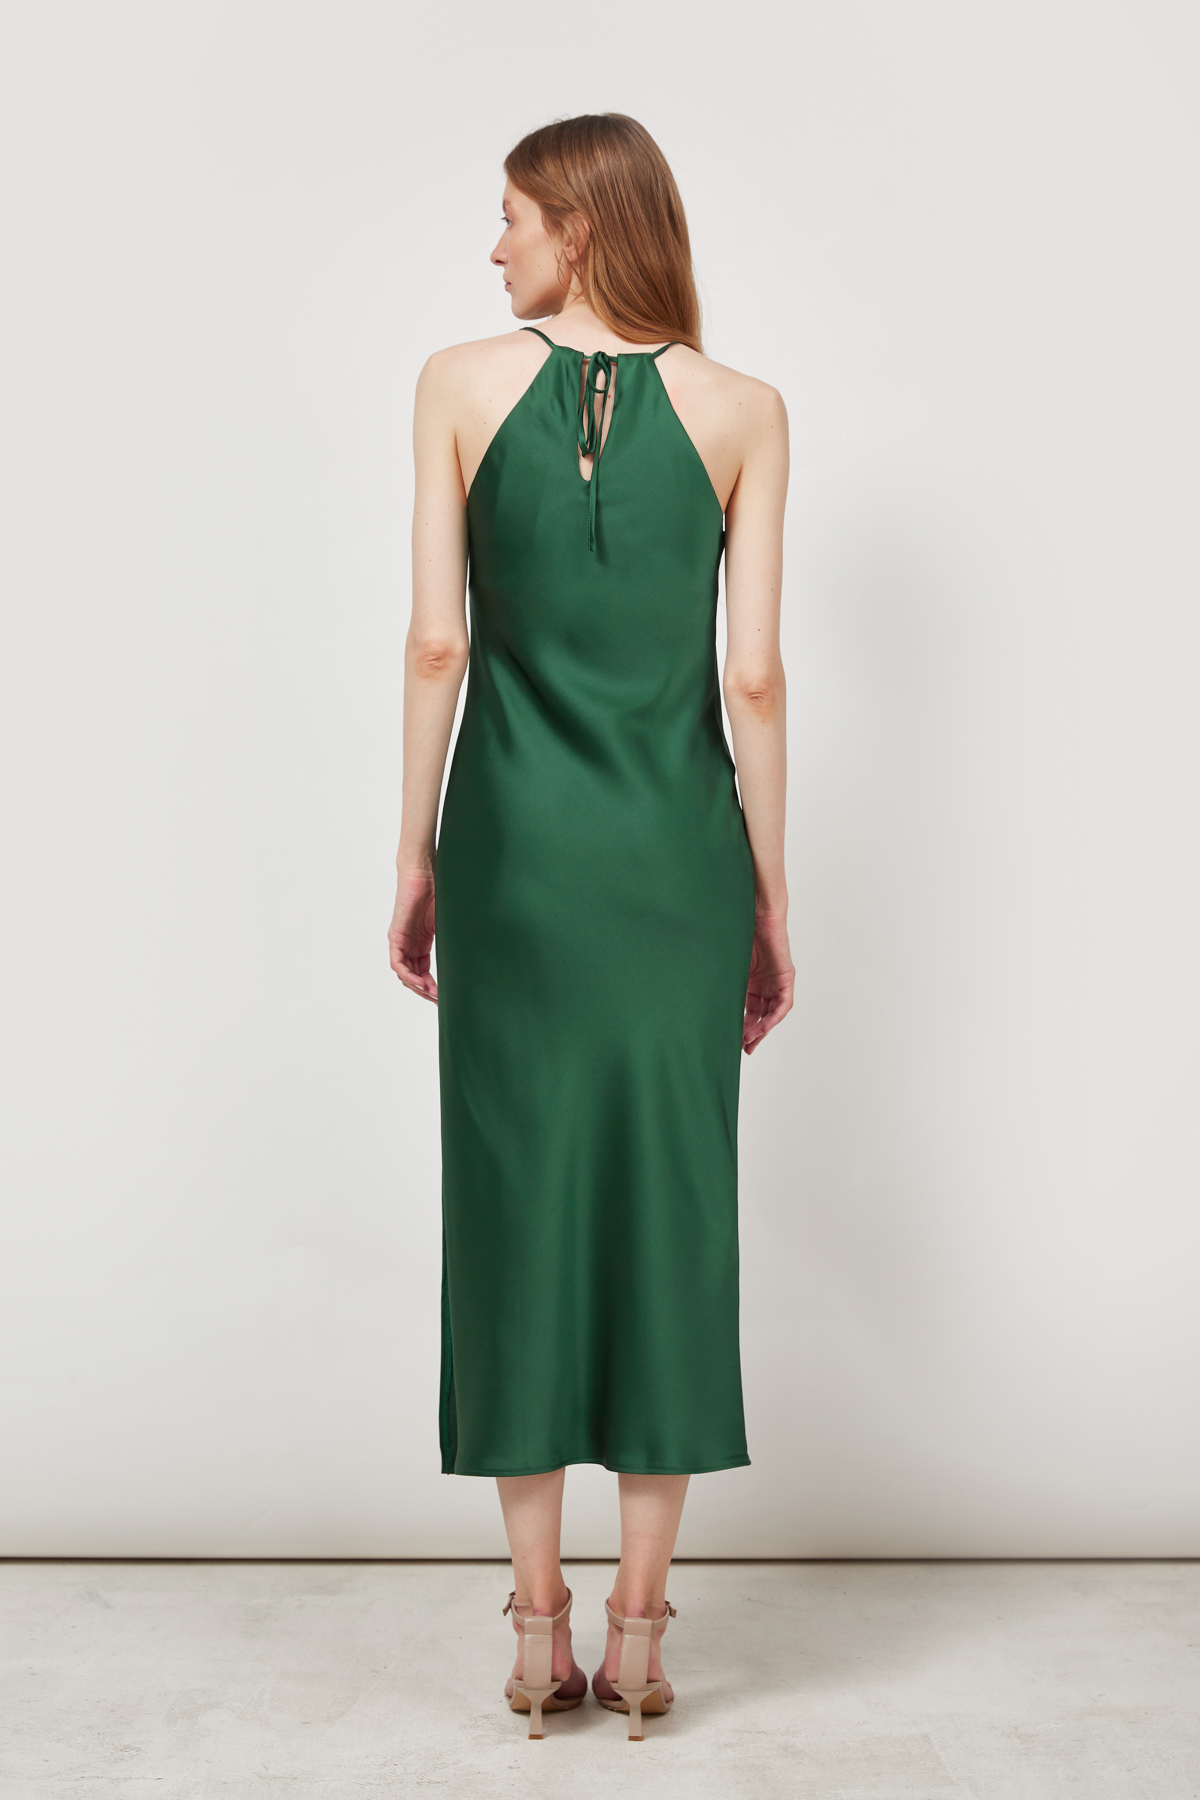 Emerald green satin slip dress, photo 2